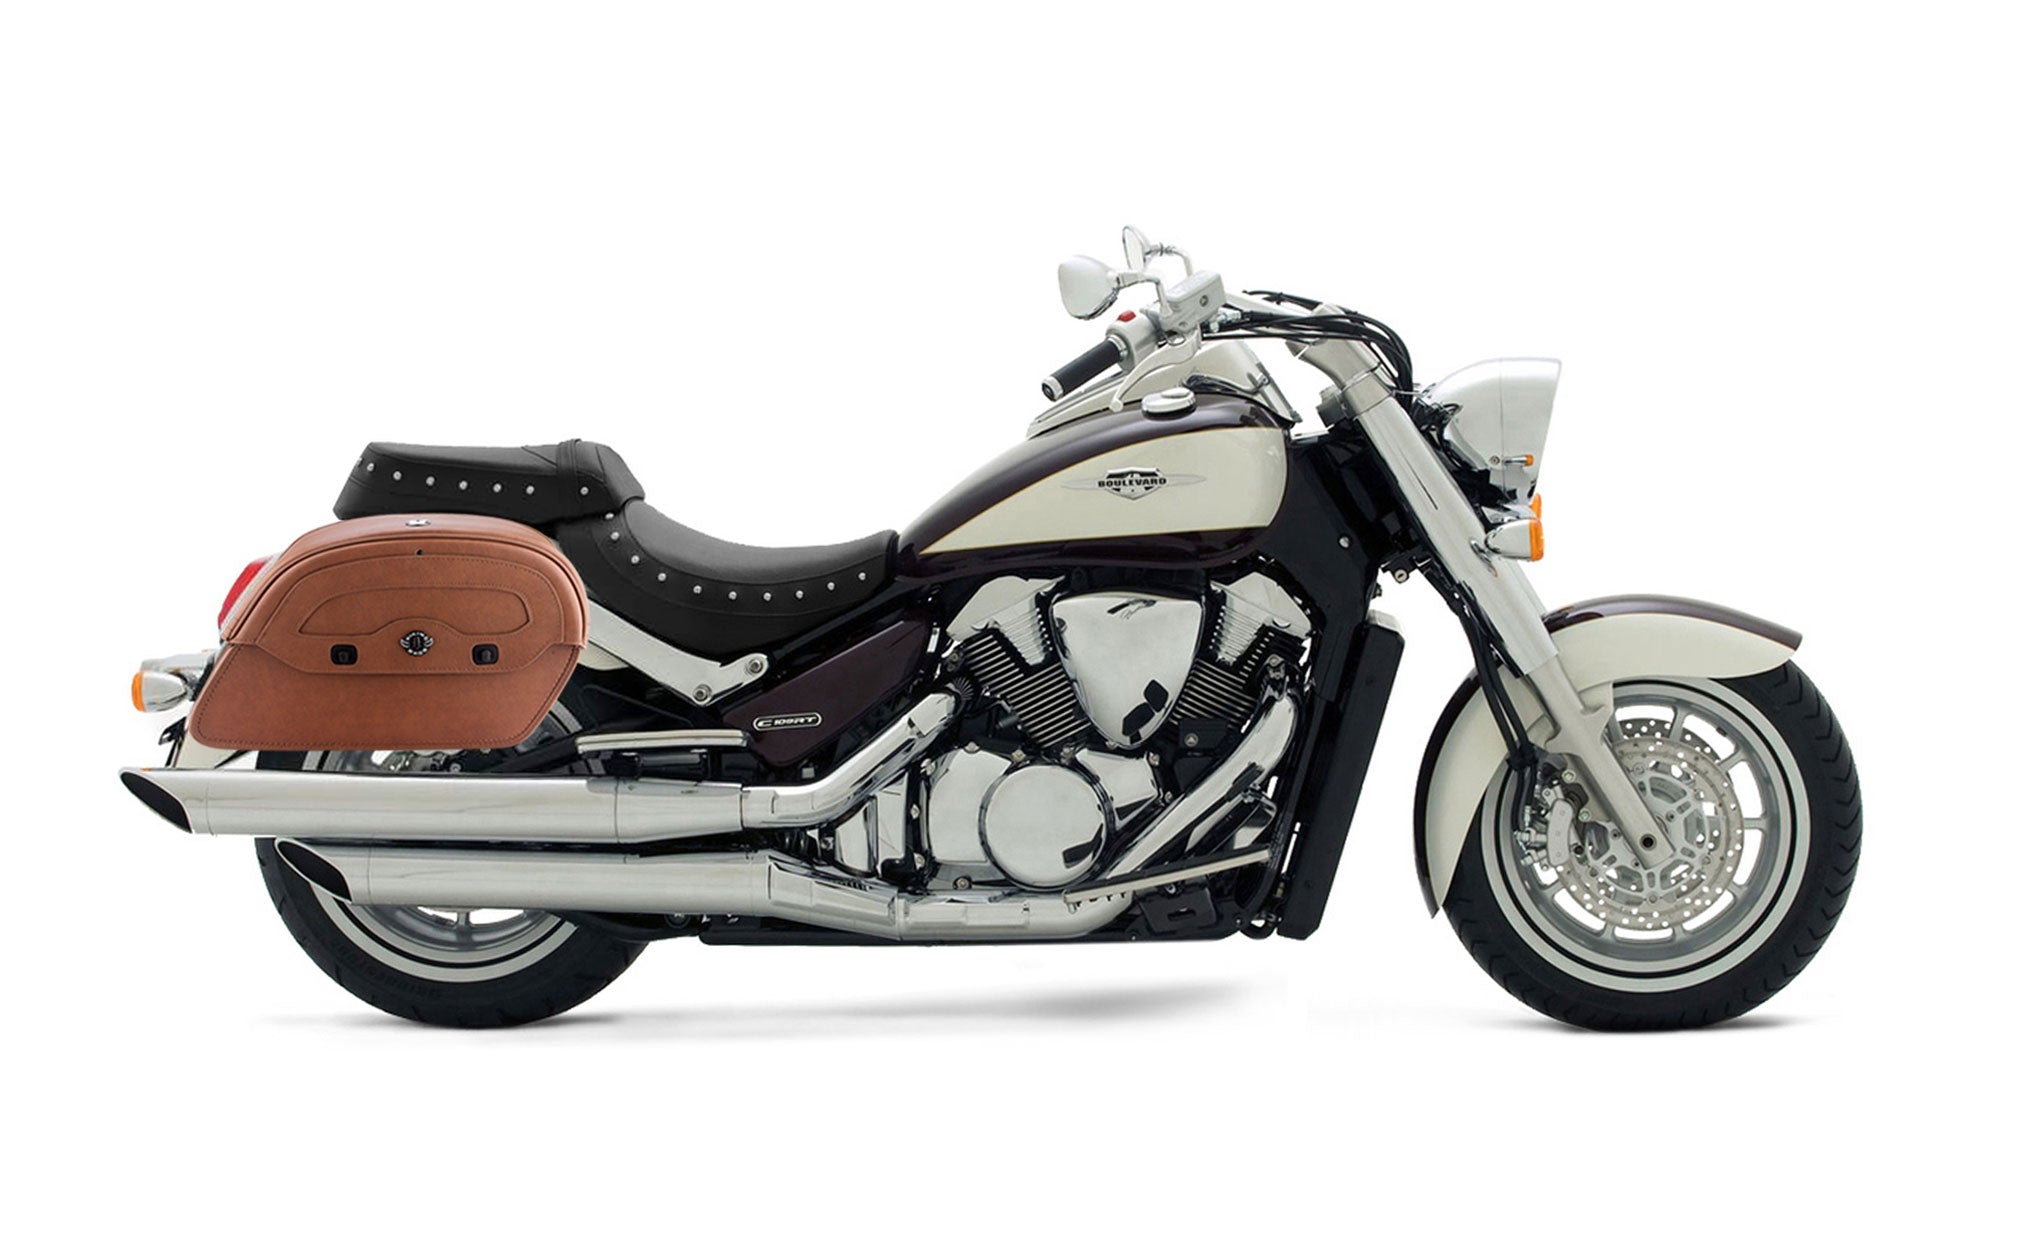 Viking Warrior Brown Large Suzuki Boulevard C109 Leather Motorcycle Saddlebags on Bike Photo @expand